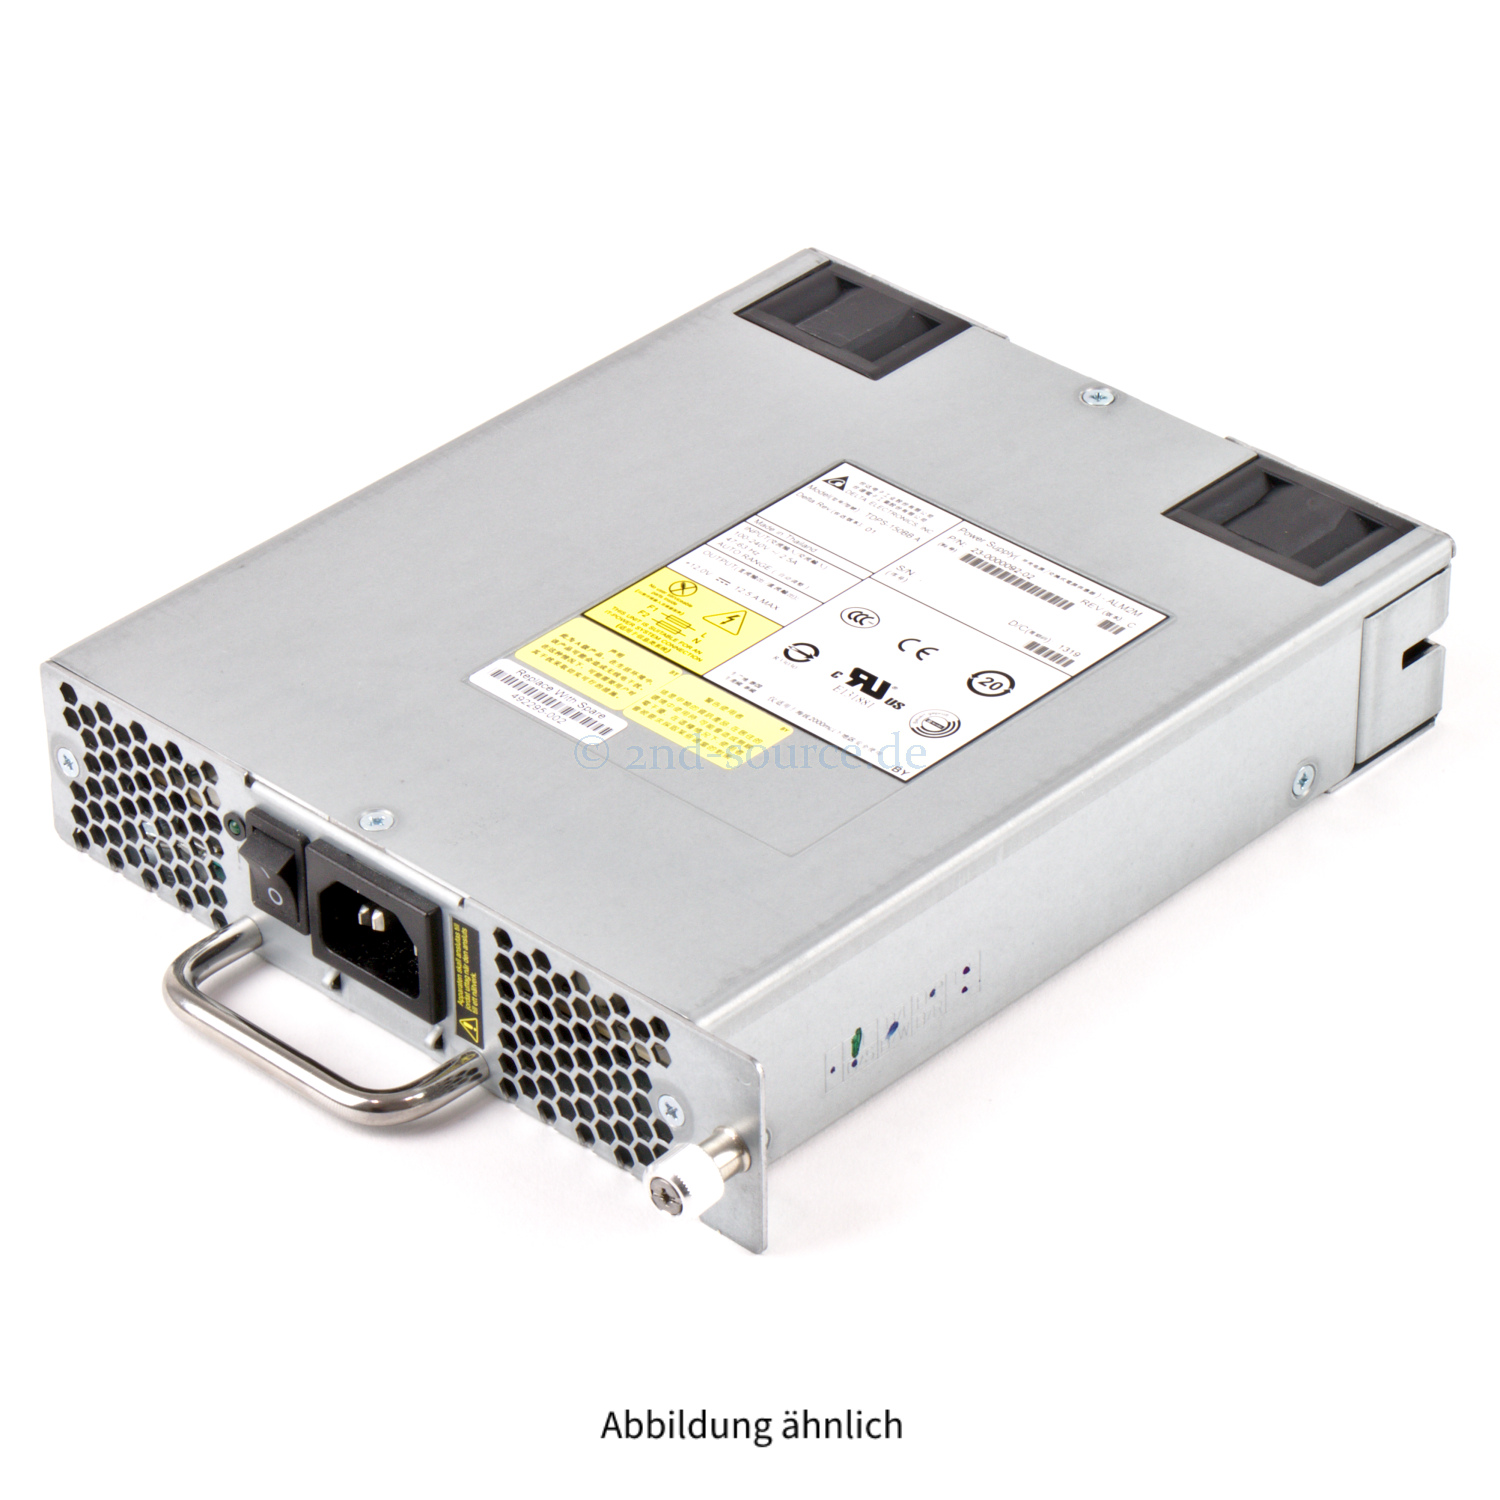 HPE 5100 Switching Power Supply SN6000B 492295-002